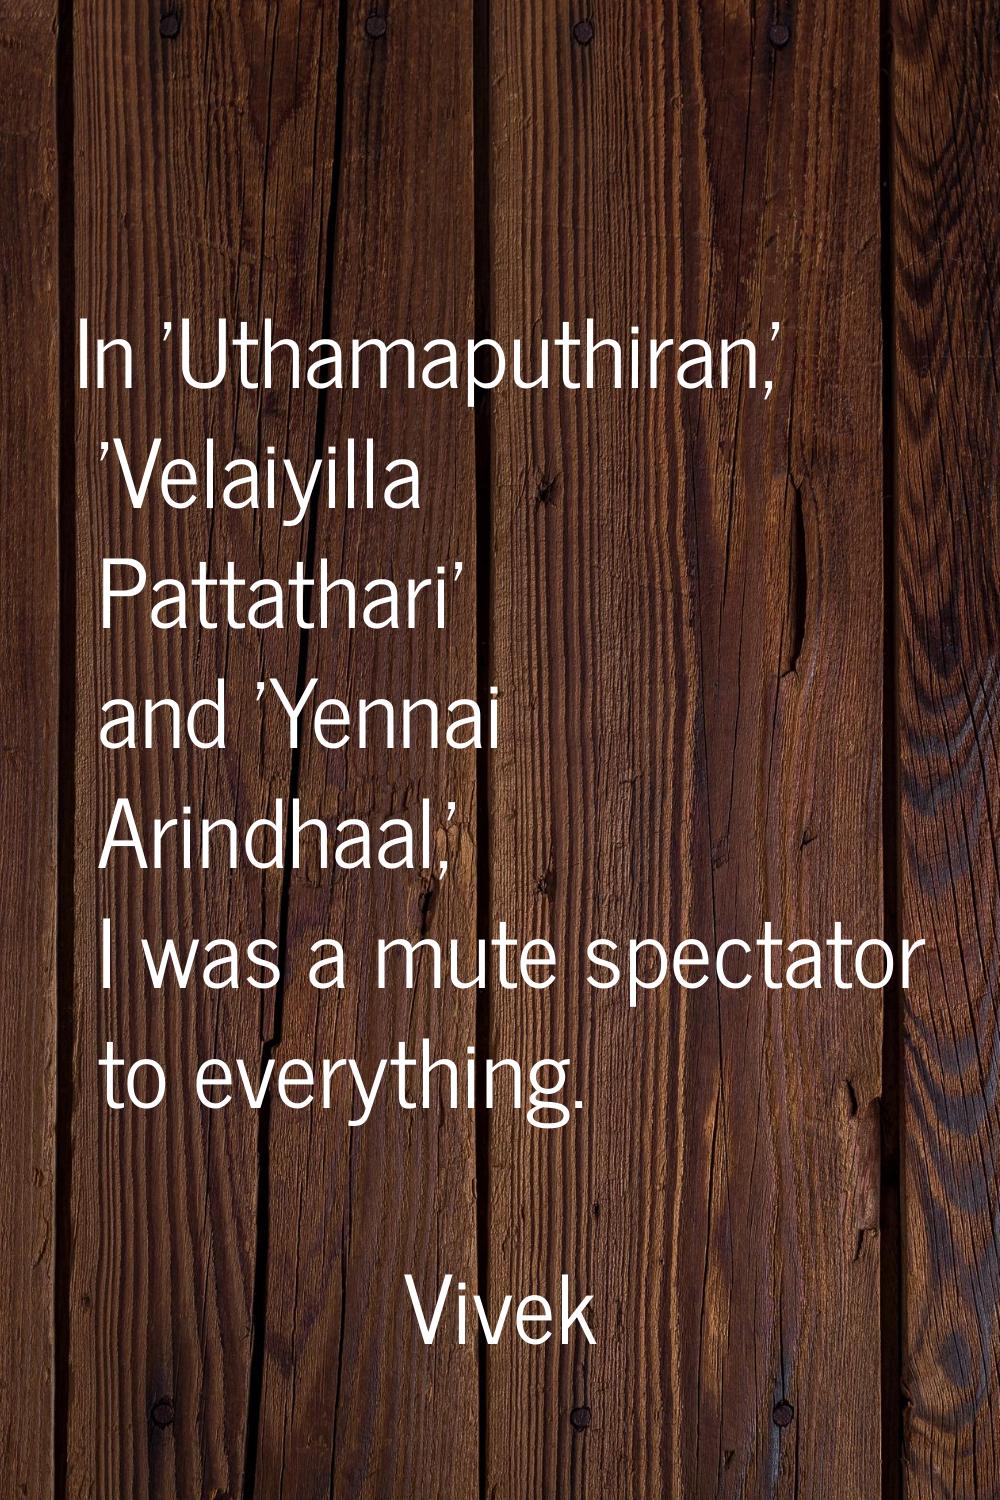 In 'Uthamaputhiran,' 'Velaiyilla Pattathari' and 'Yennai Arindhaal,' I was a mute spectator to ever